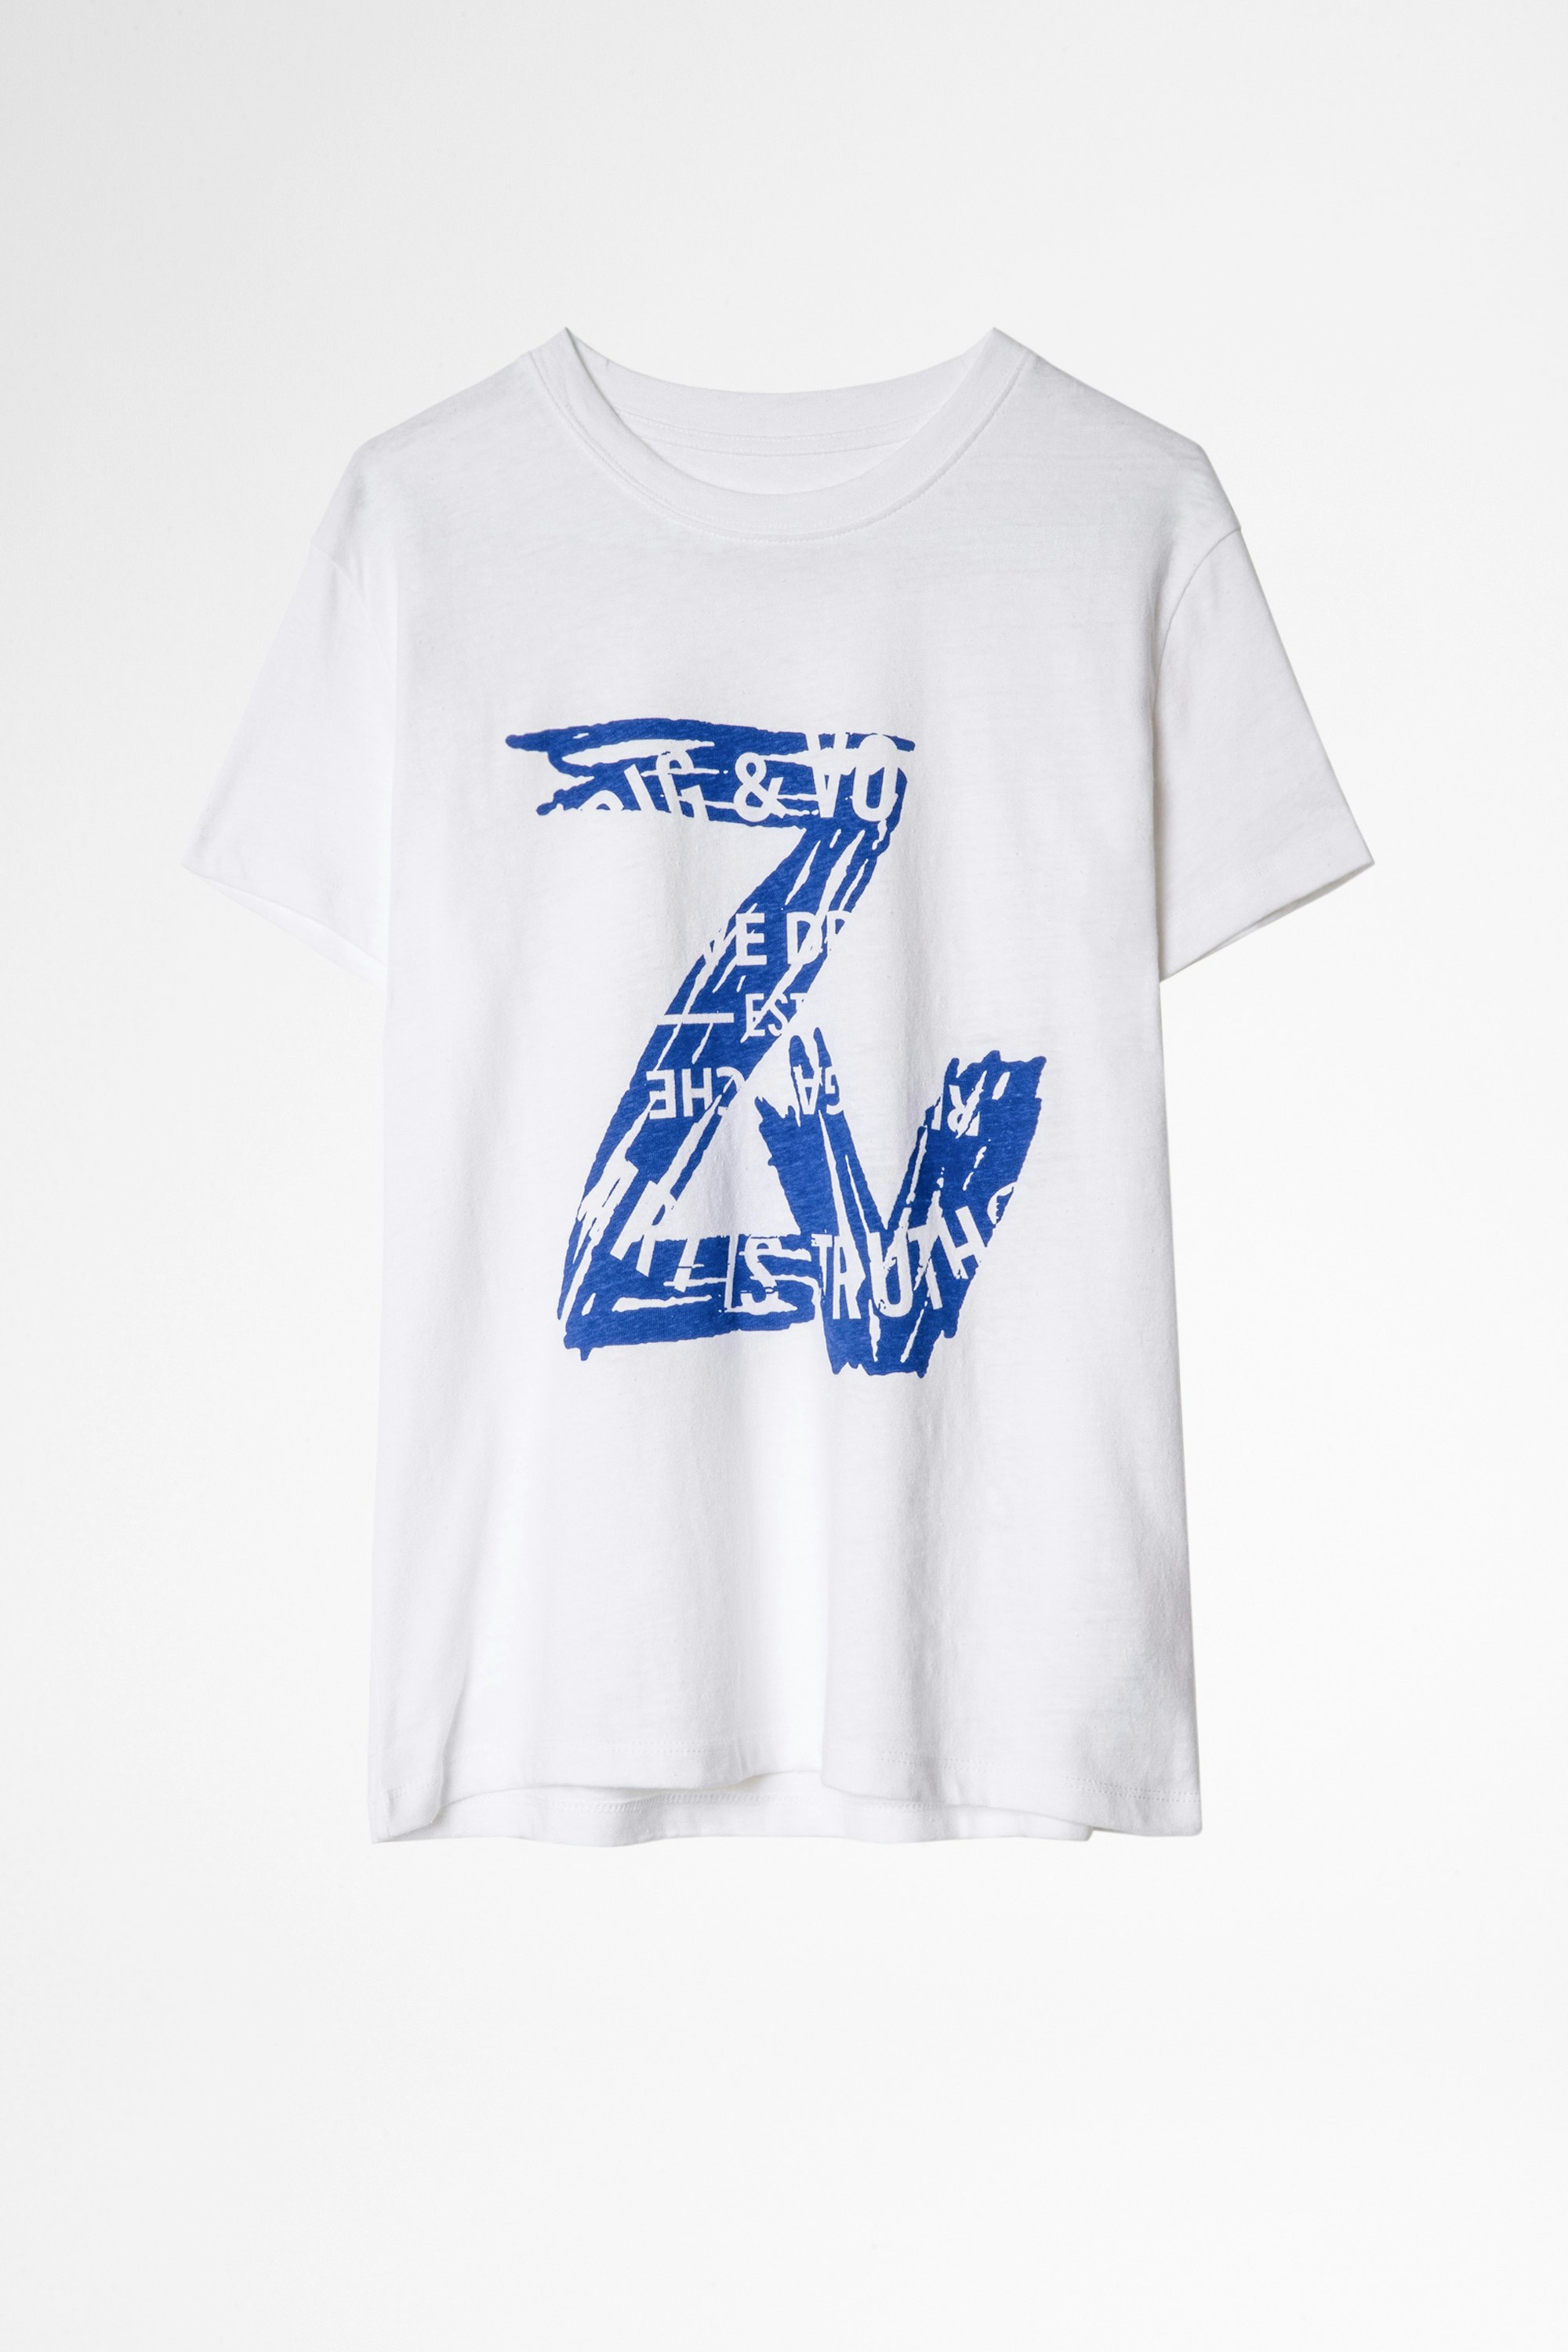 Camiseta Zoe ZV New Blason Camiseta blanca de algodón con blasón ZV